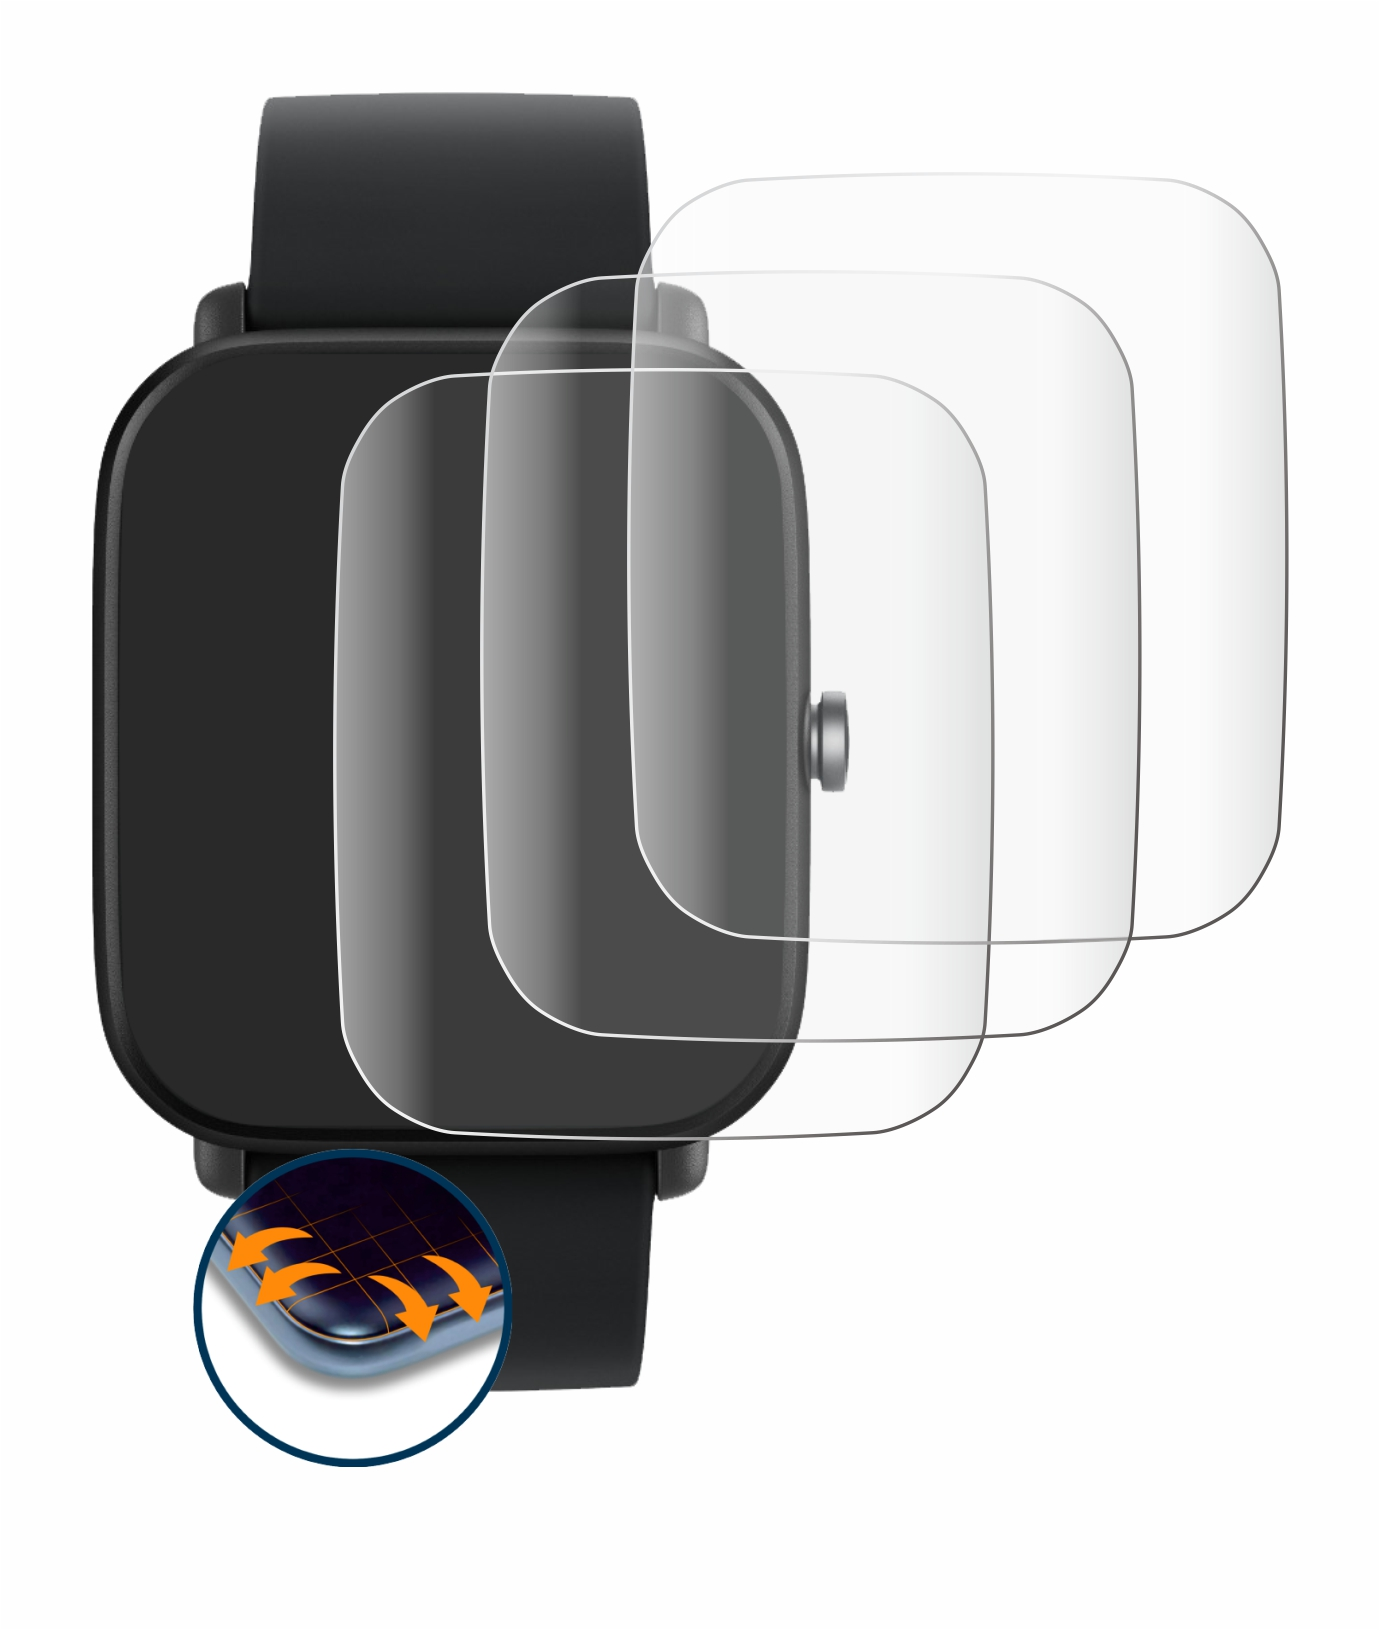 SAVVIES 4x Flex Huami Schutzfolie(für 3D U Pro) Curved Amazfit Full-Cover Bip